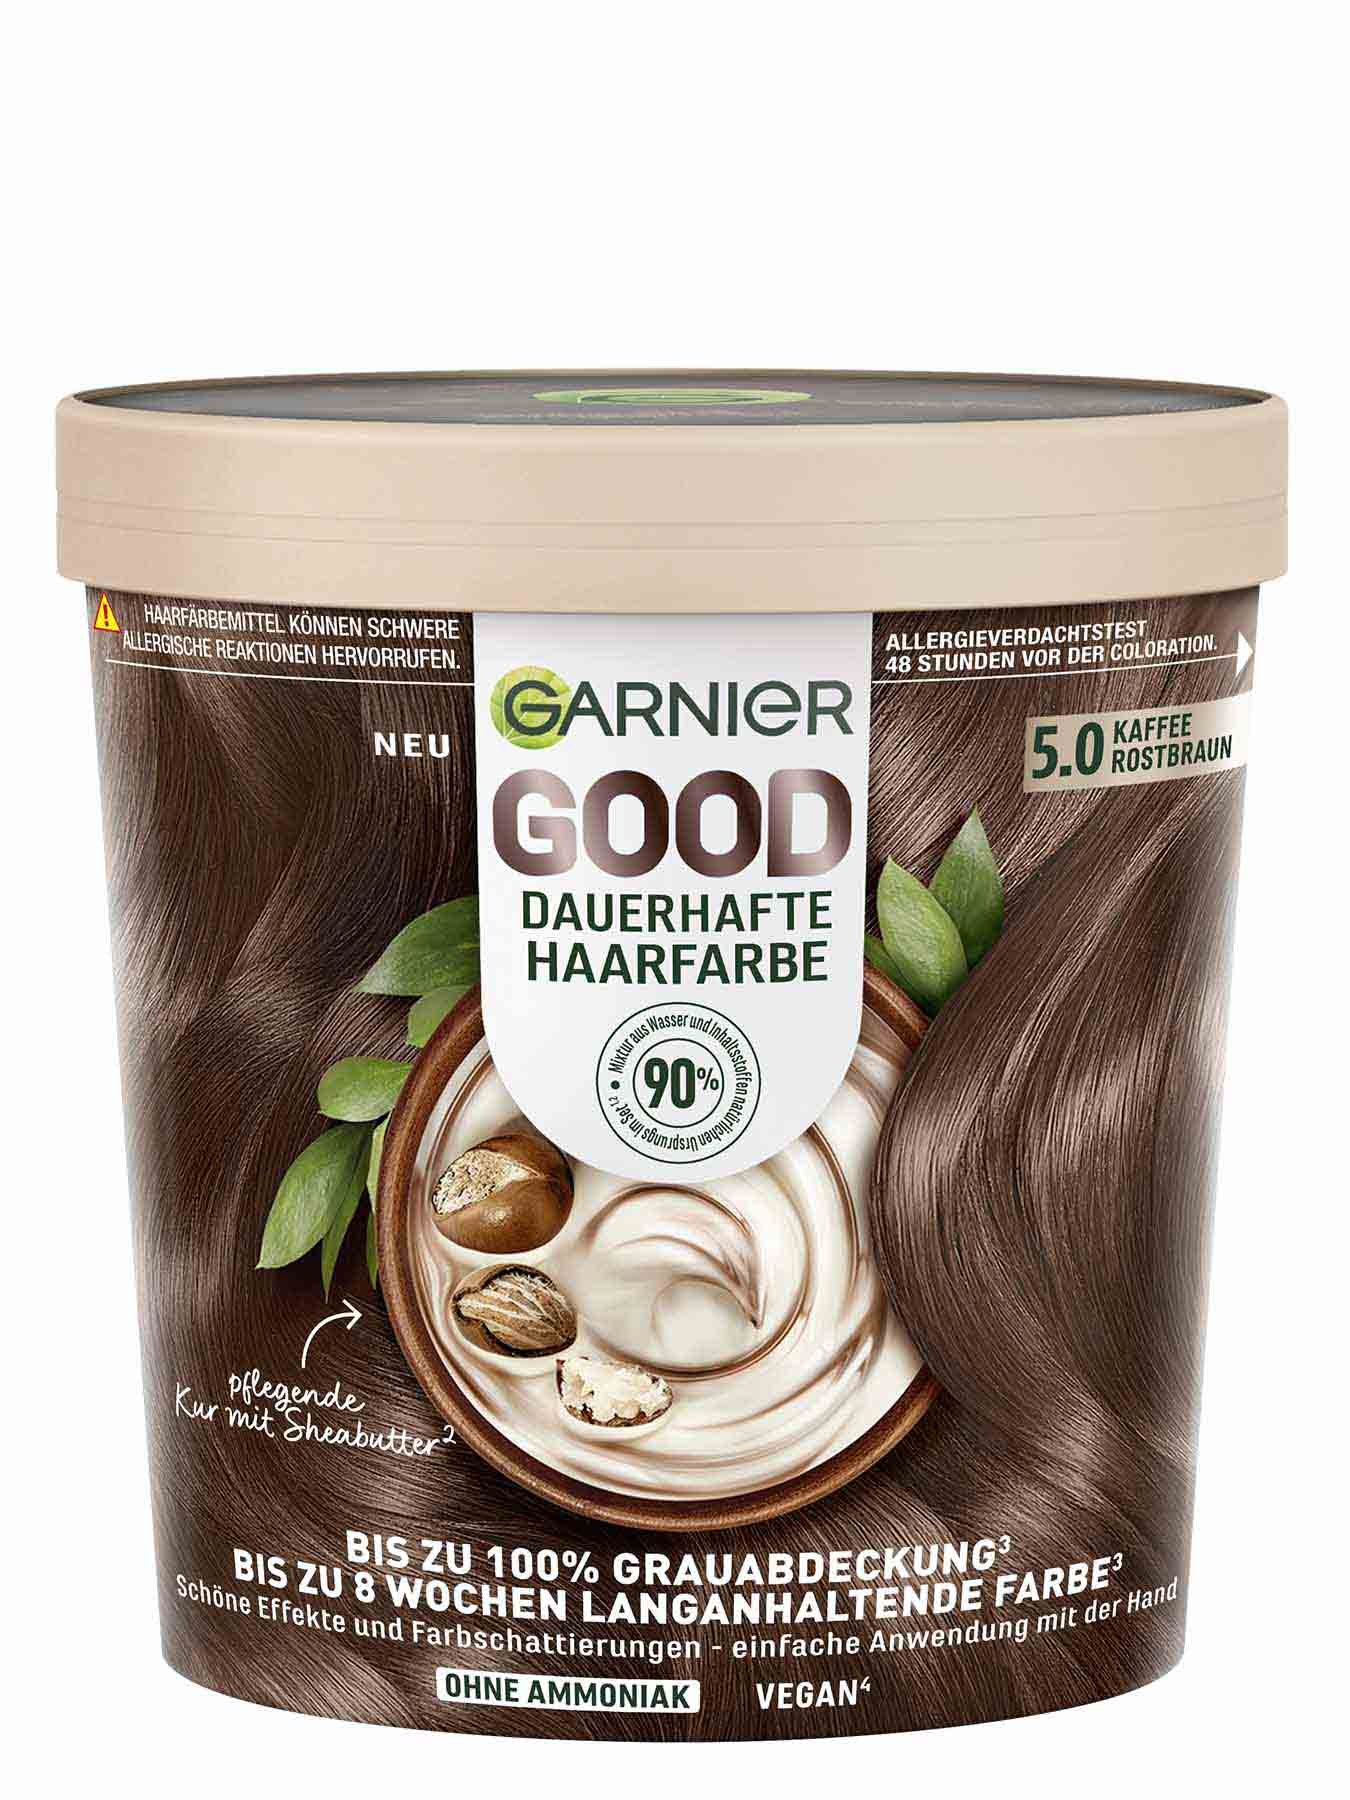 GOOD Dauerhafte Haarfarbe 5.0 Kaffee Rostbraun Produktbild